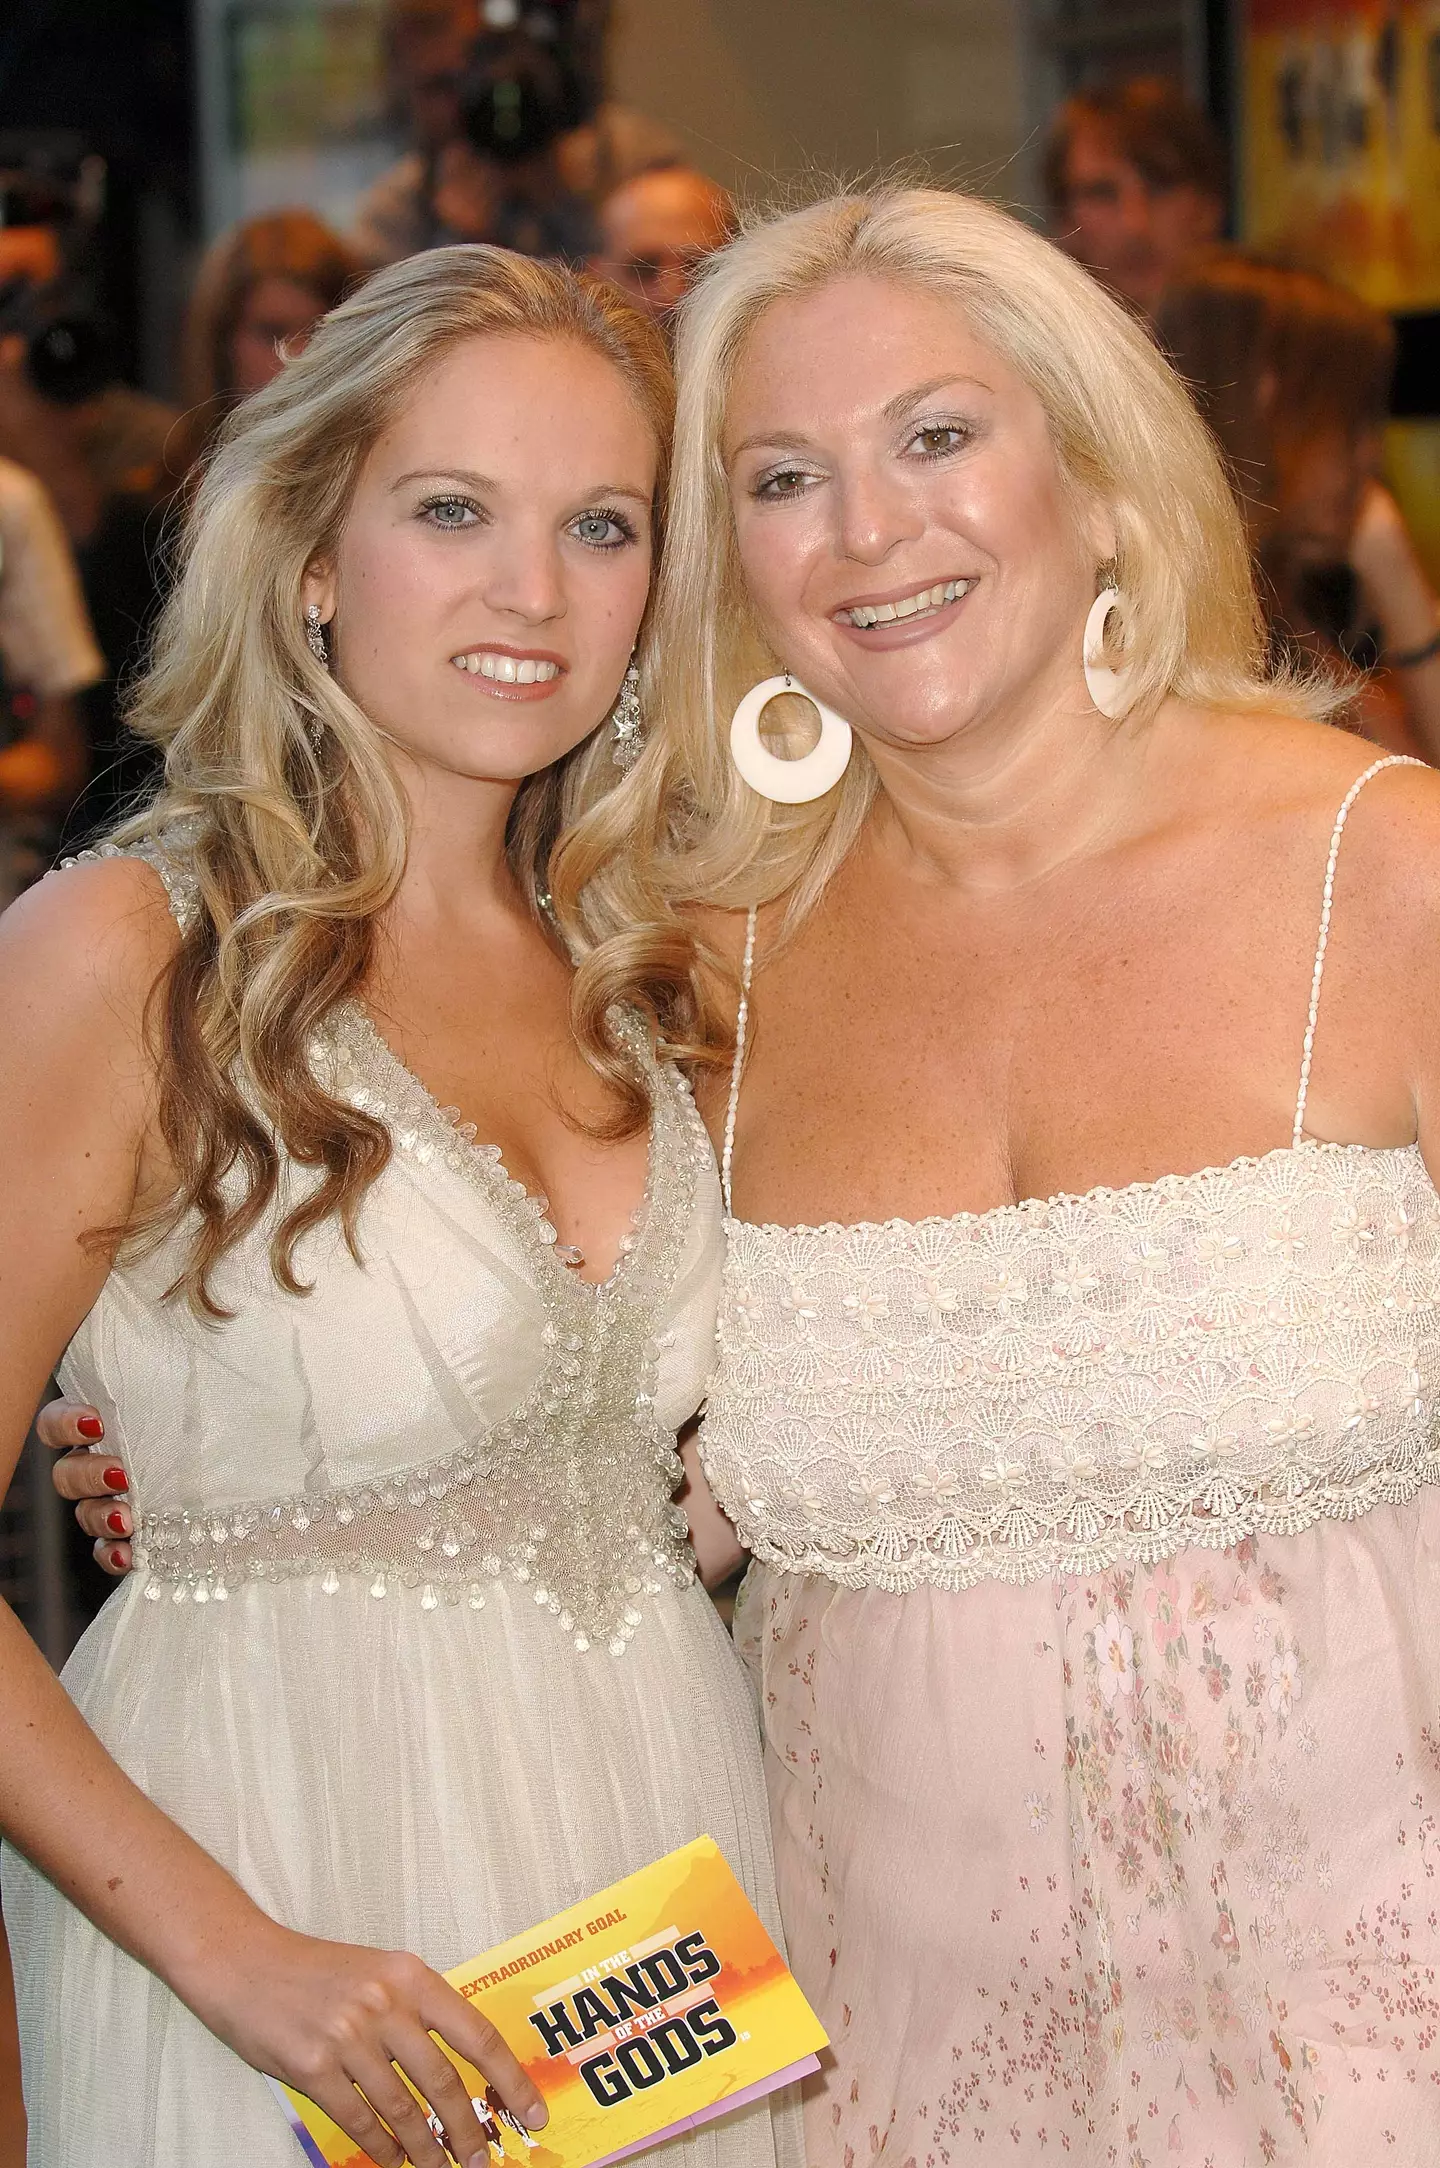 Vanessa pictured with her daughter Allegra in 2007.